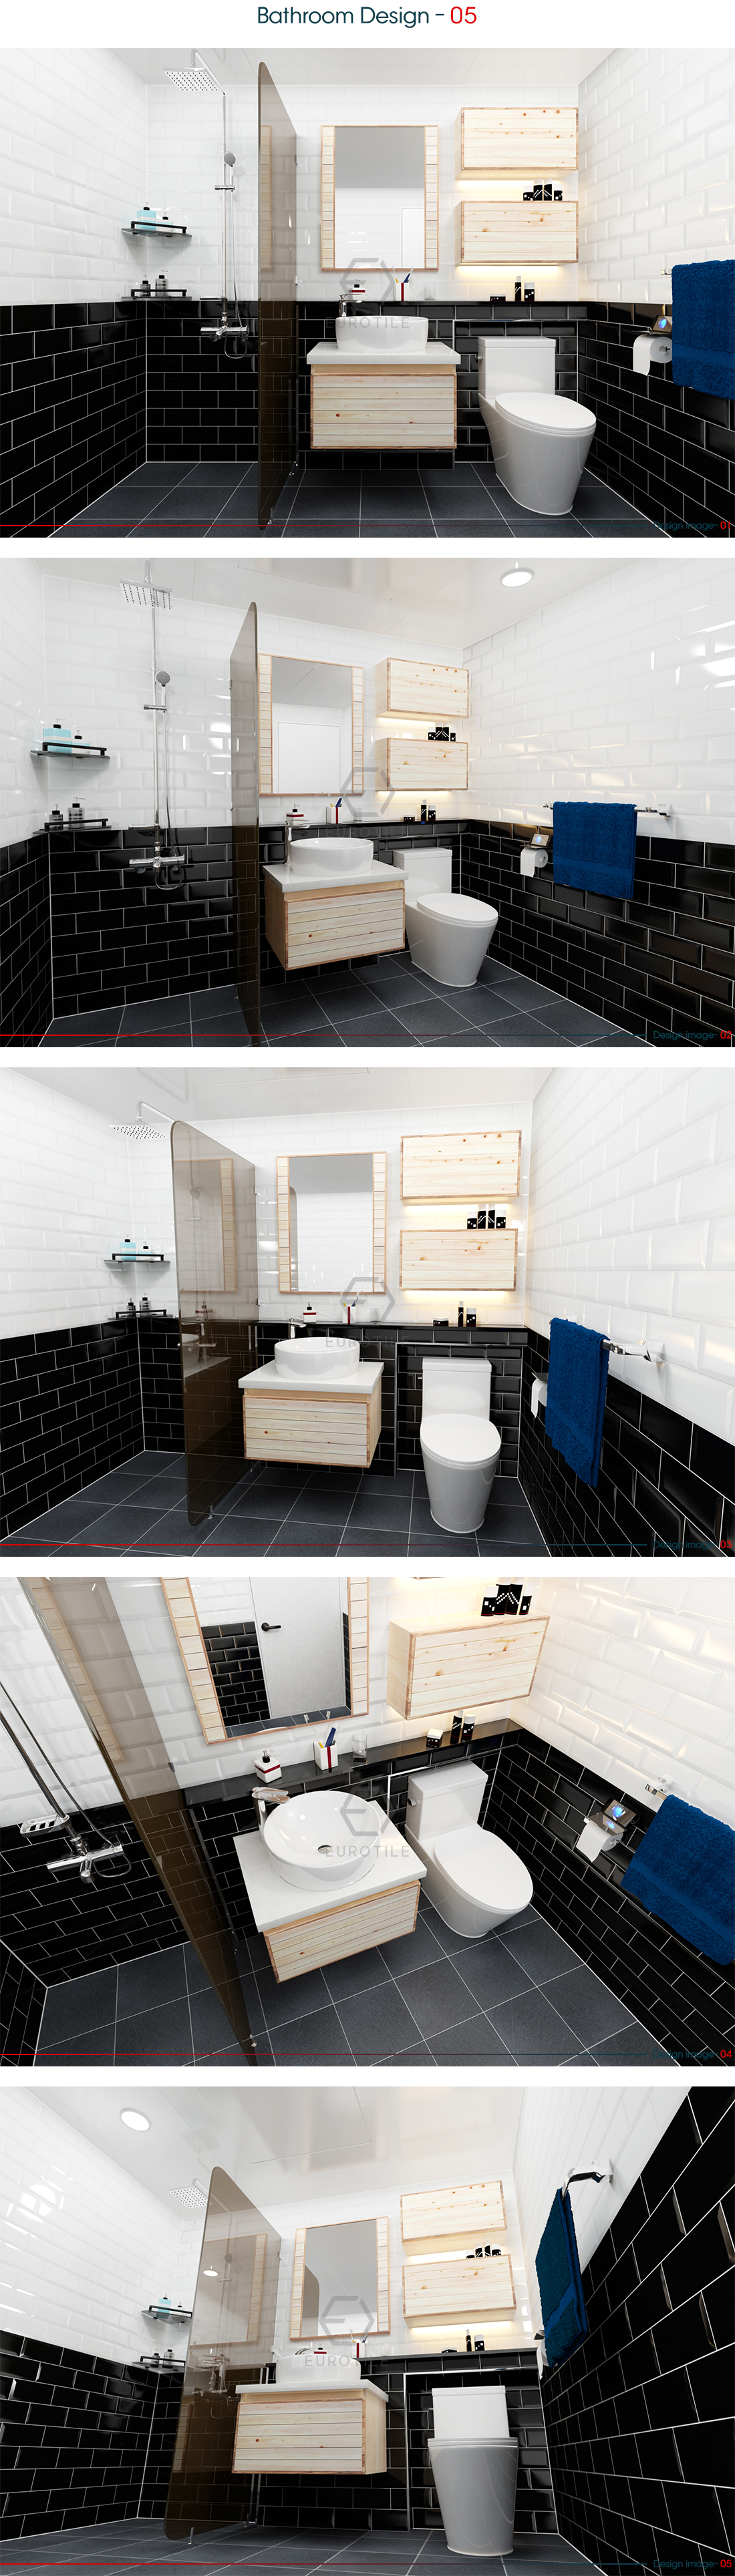 bathroomdesign-05_110203.jpg